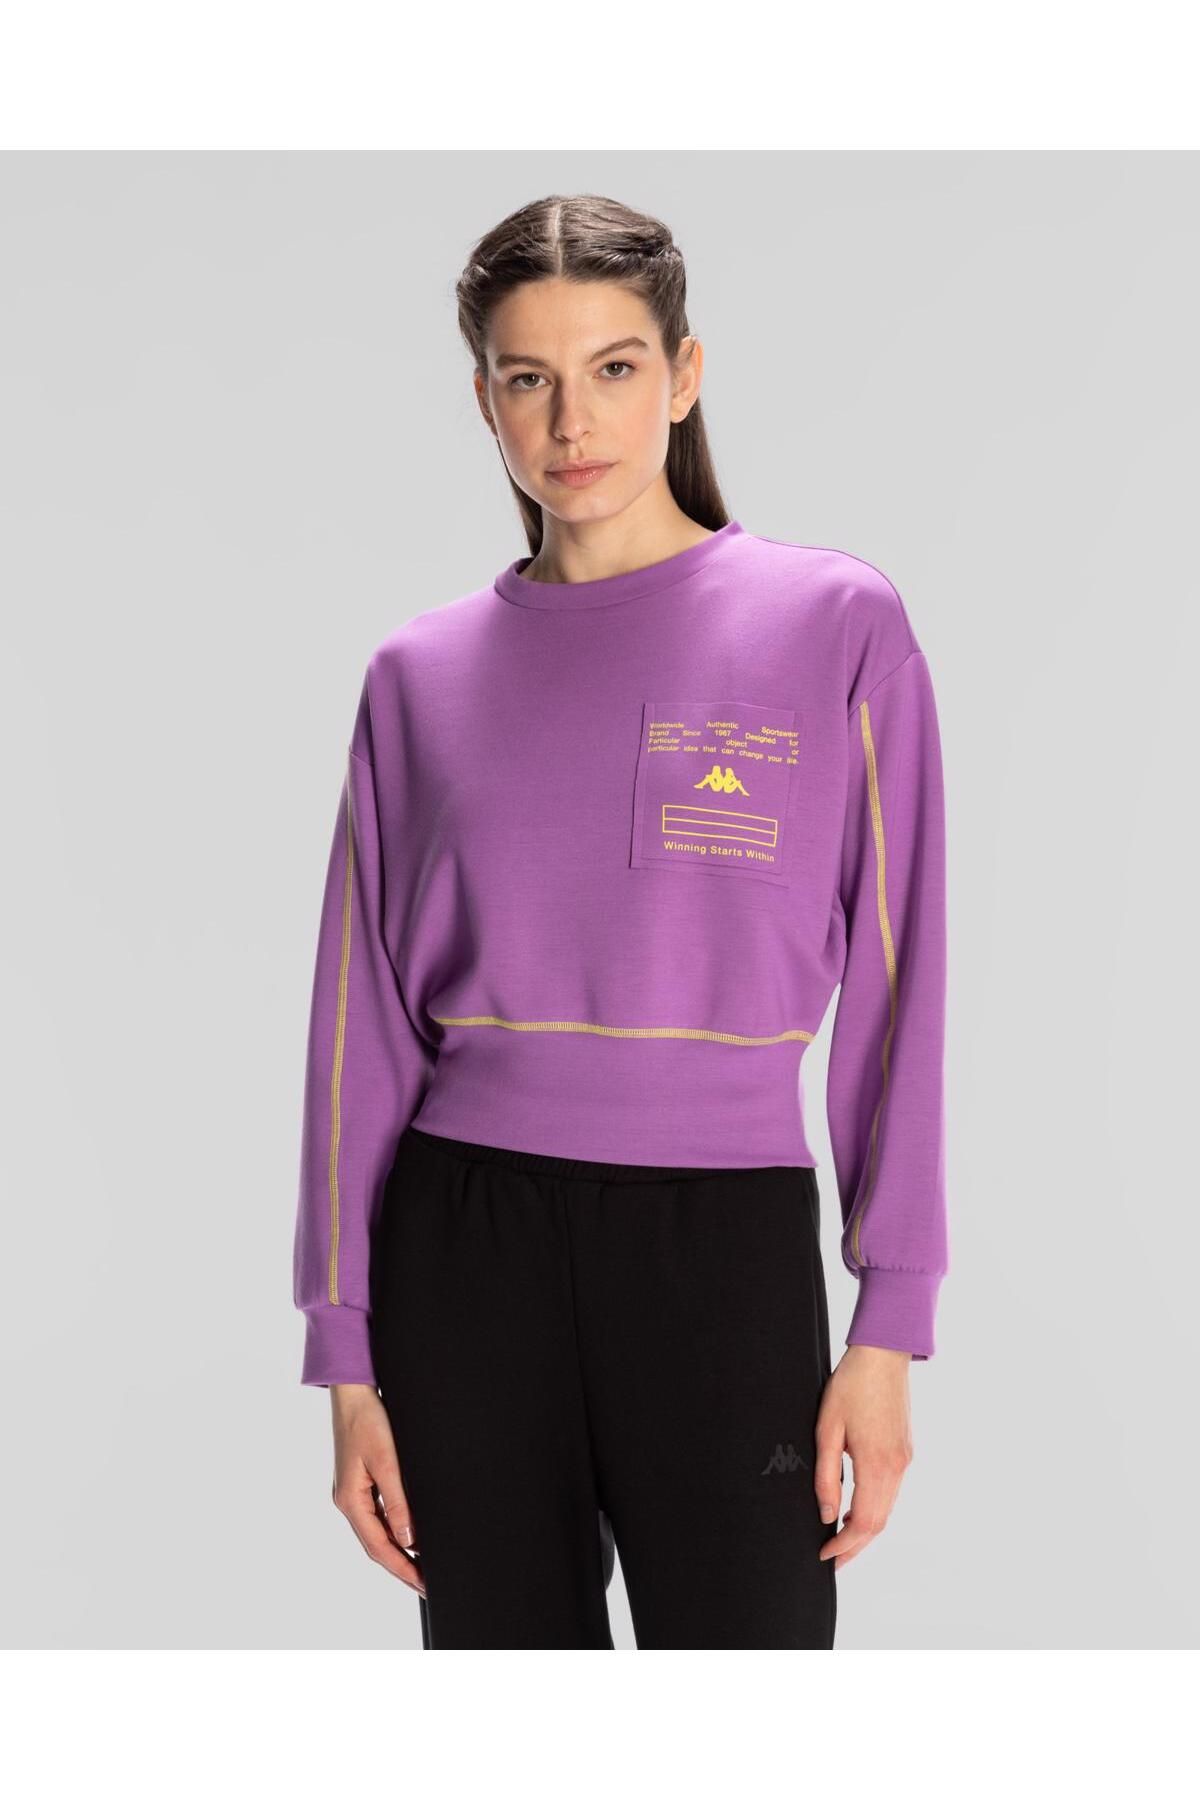 Kappa Authentic Kage Sweatshirt Kadın Mor Regular Fit Sweatshirt